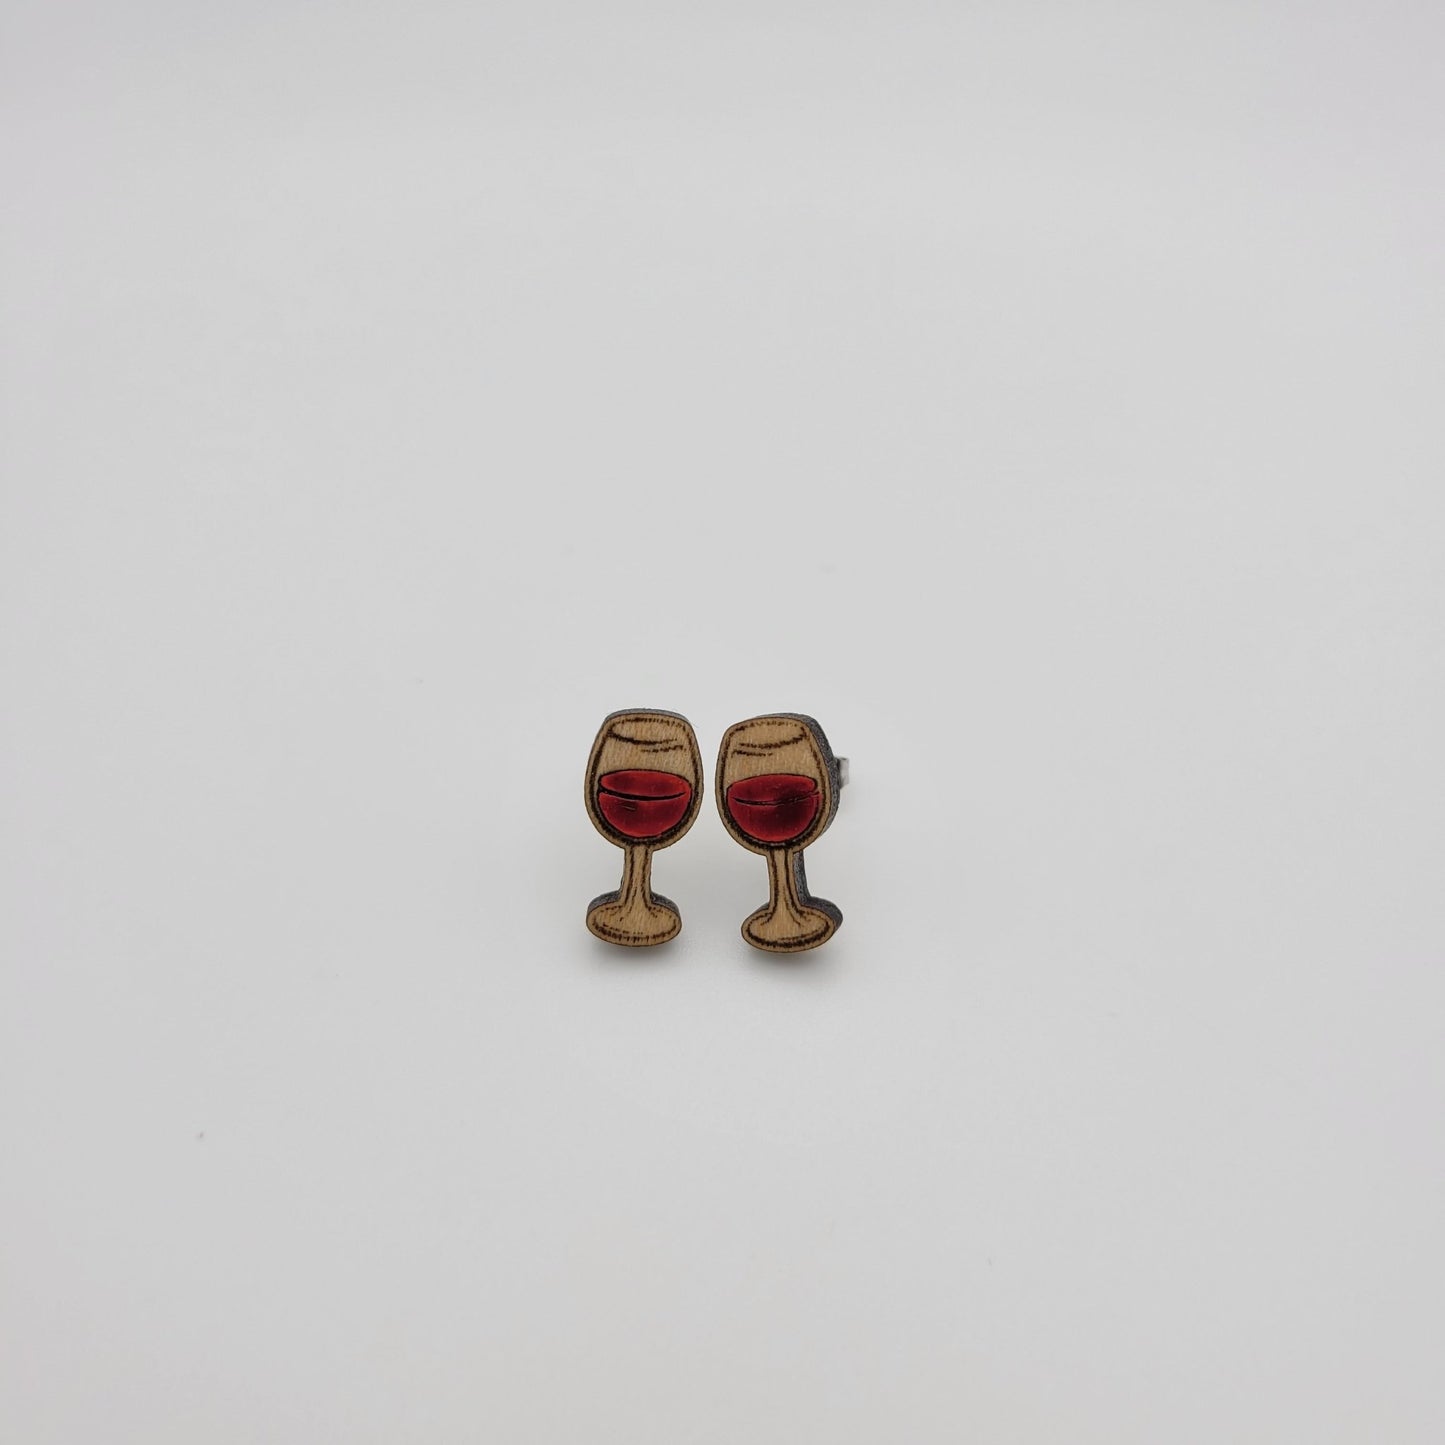 Hand Painted Wine Glass Stud Earrings - 4 Arrows Creations